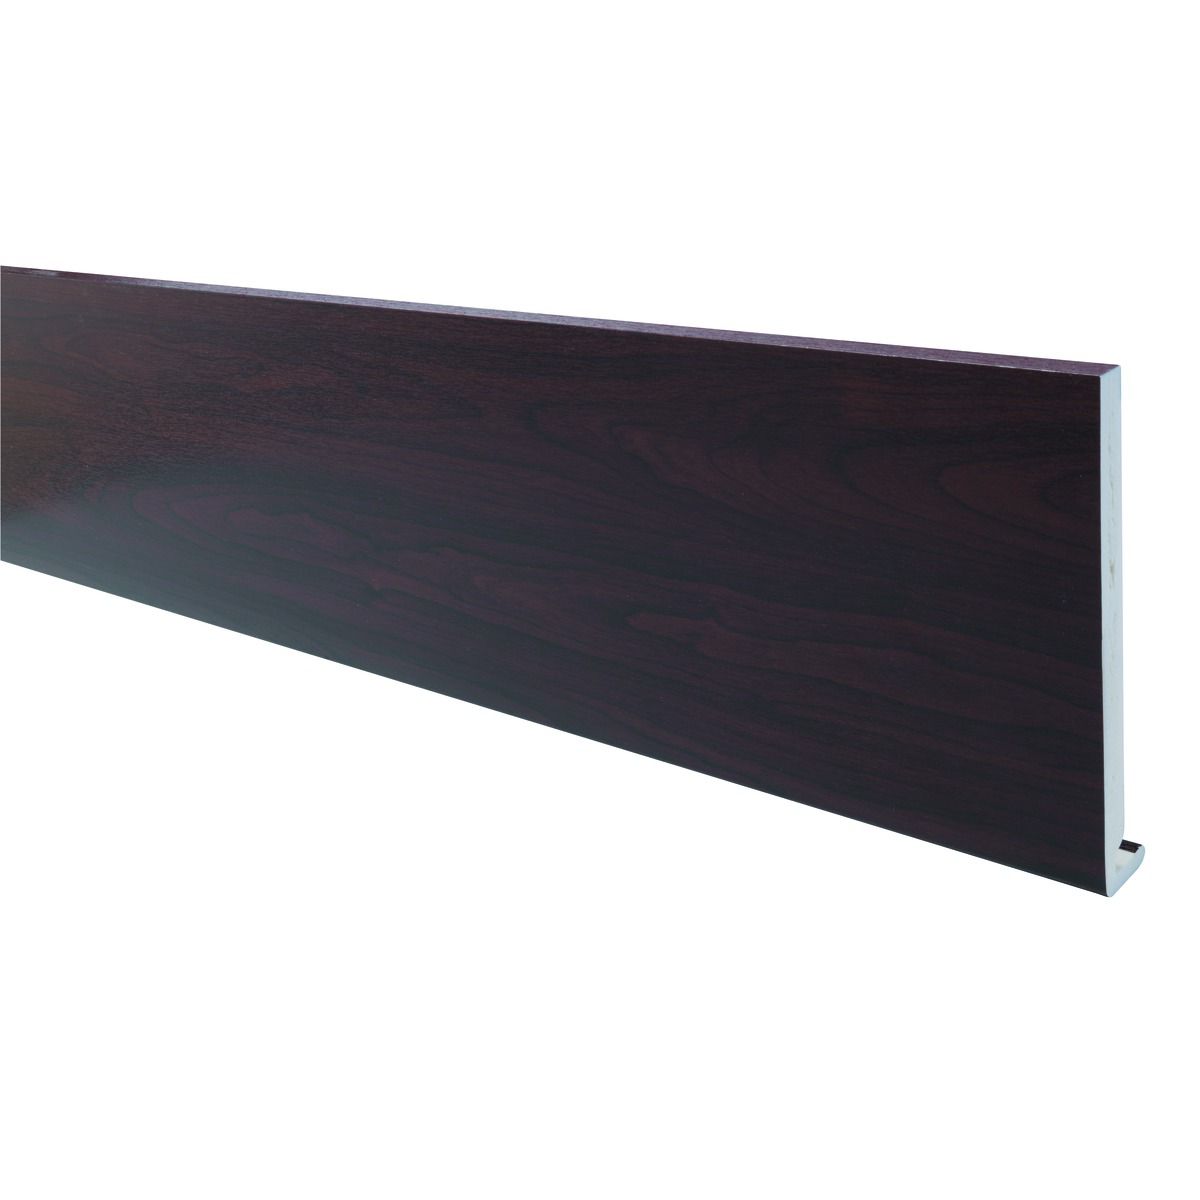 Image of Wickes PVCu Rosewood Fascia Board 18 x 175 x 4000mm